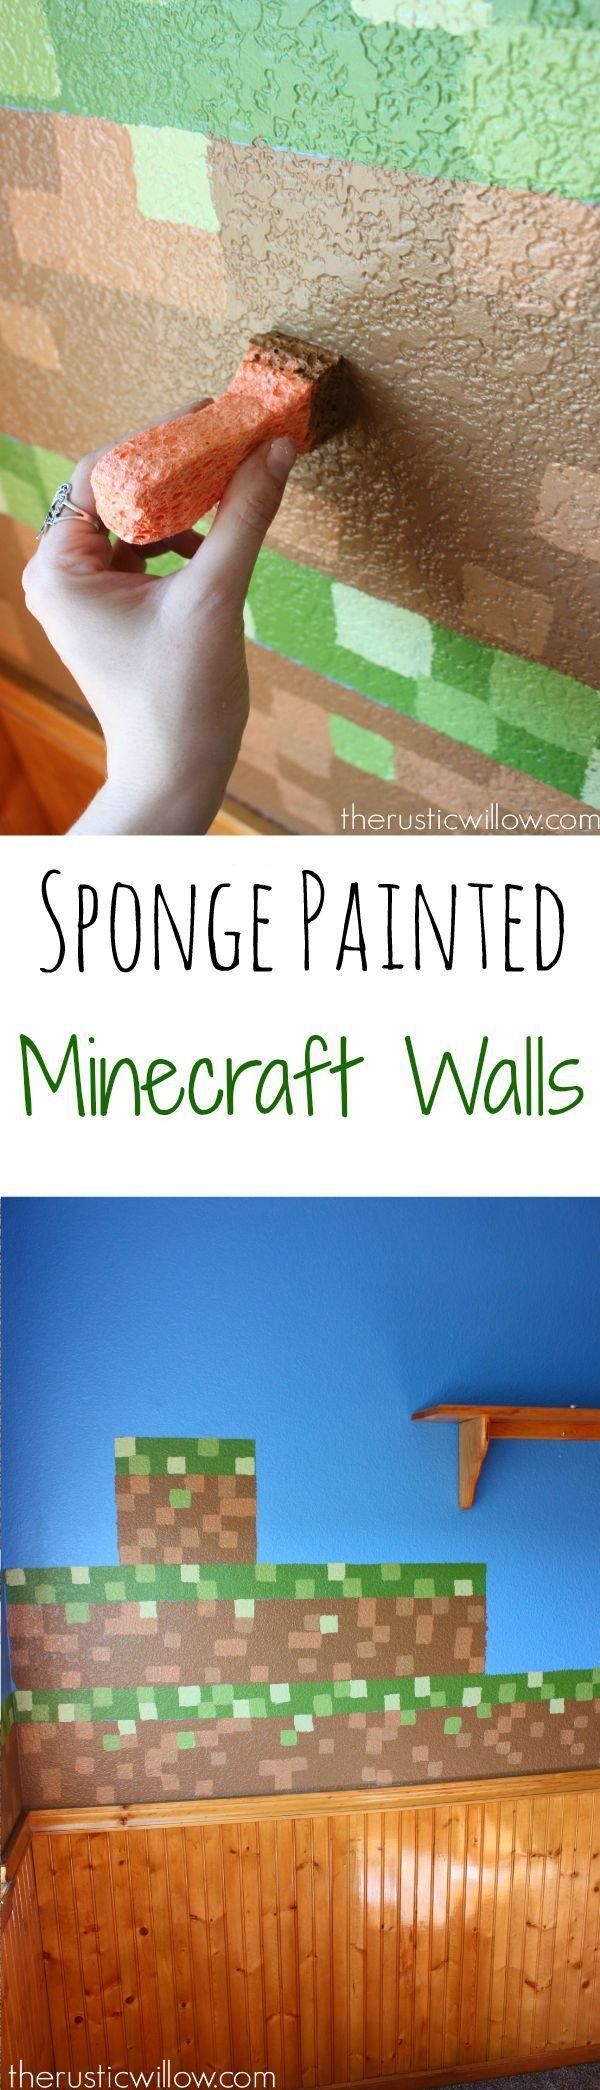 25+ Best Boys Minecraft Bedroom Ideas On Pinterest | Minecraft Throughout Minecraft Wall Art Uk (View 15 of 20)